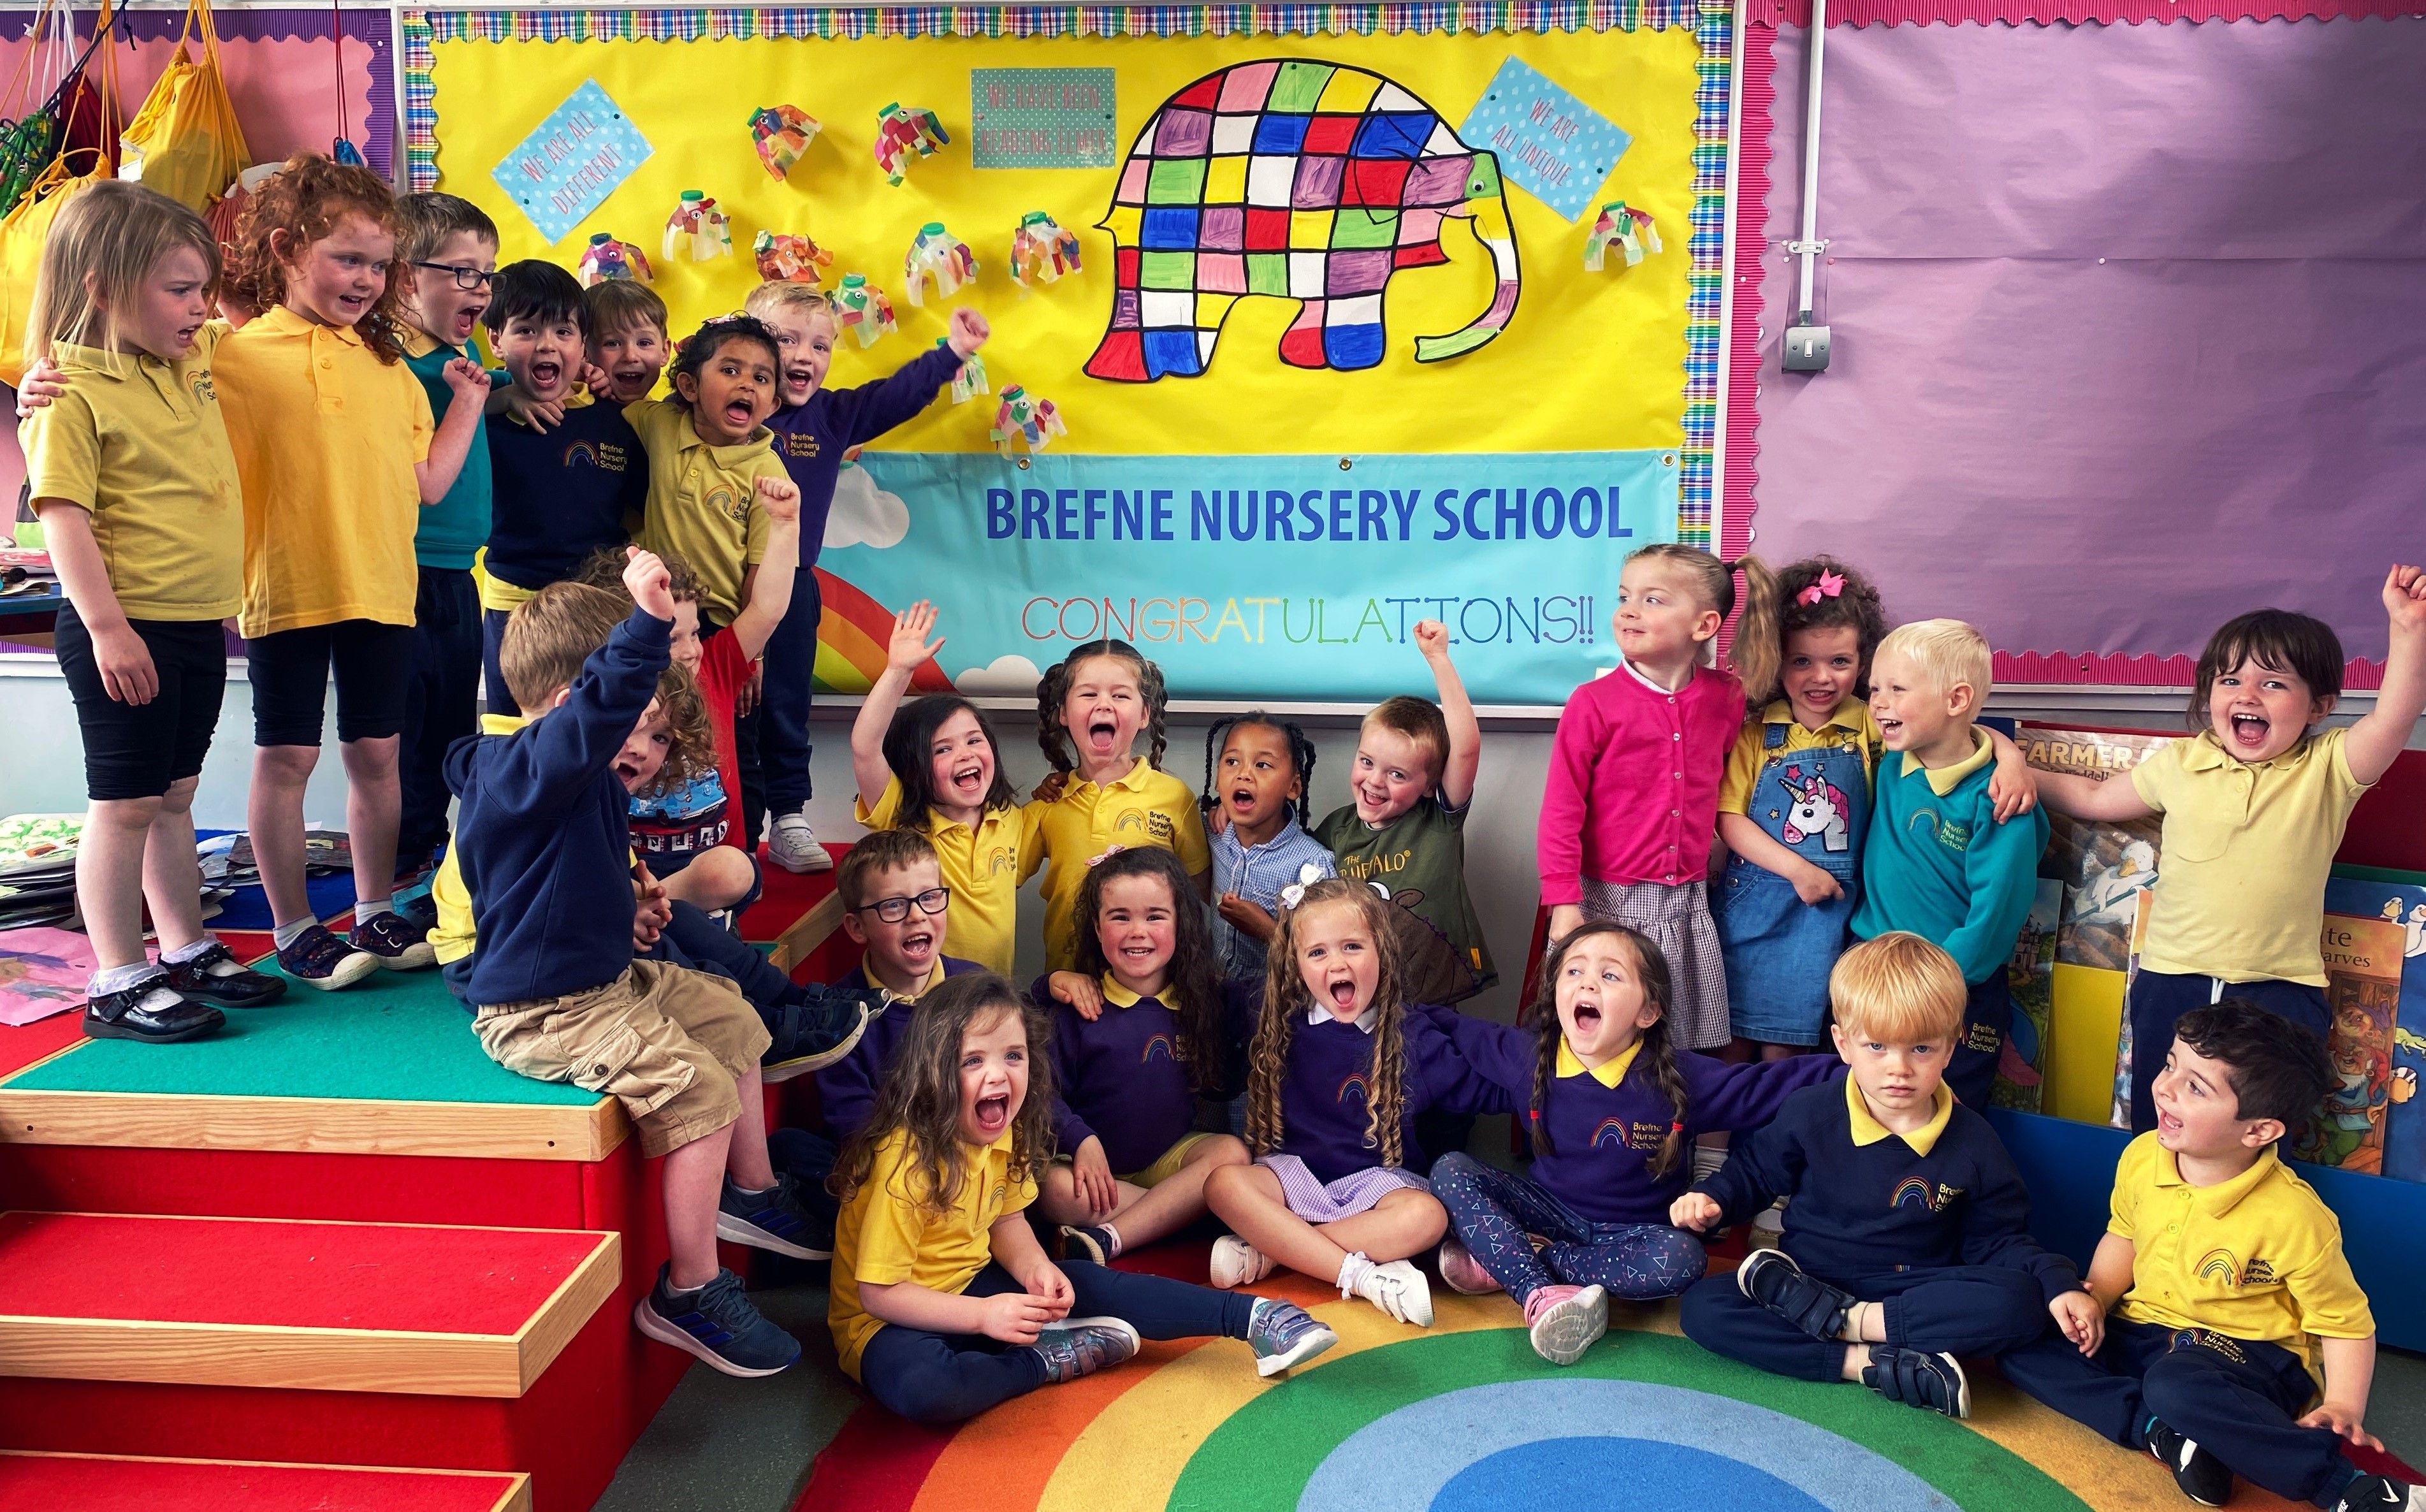 INTEGRATED STATUS: Pupils at Brefne Nursery School celebrate the news